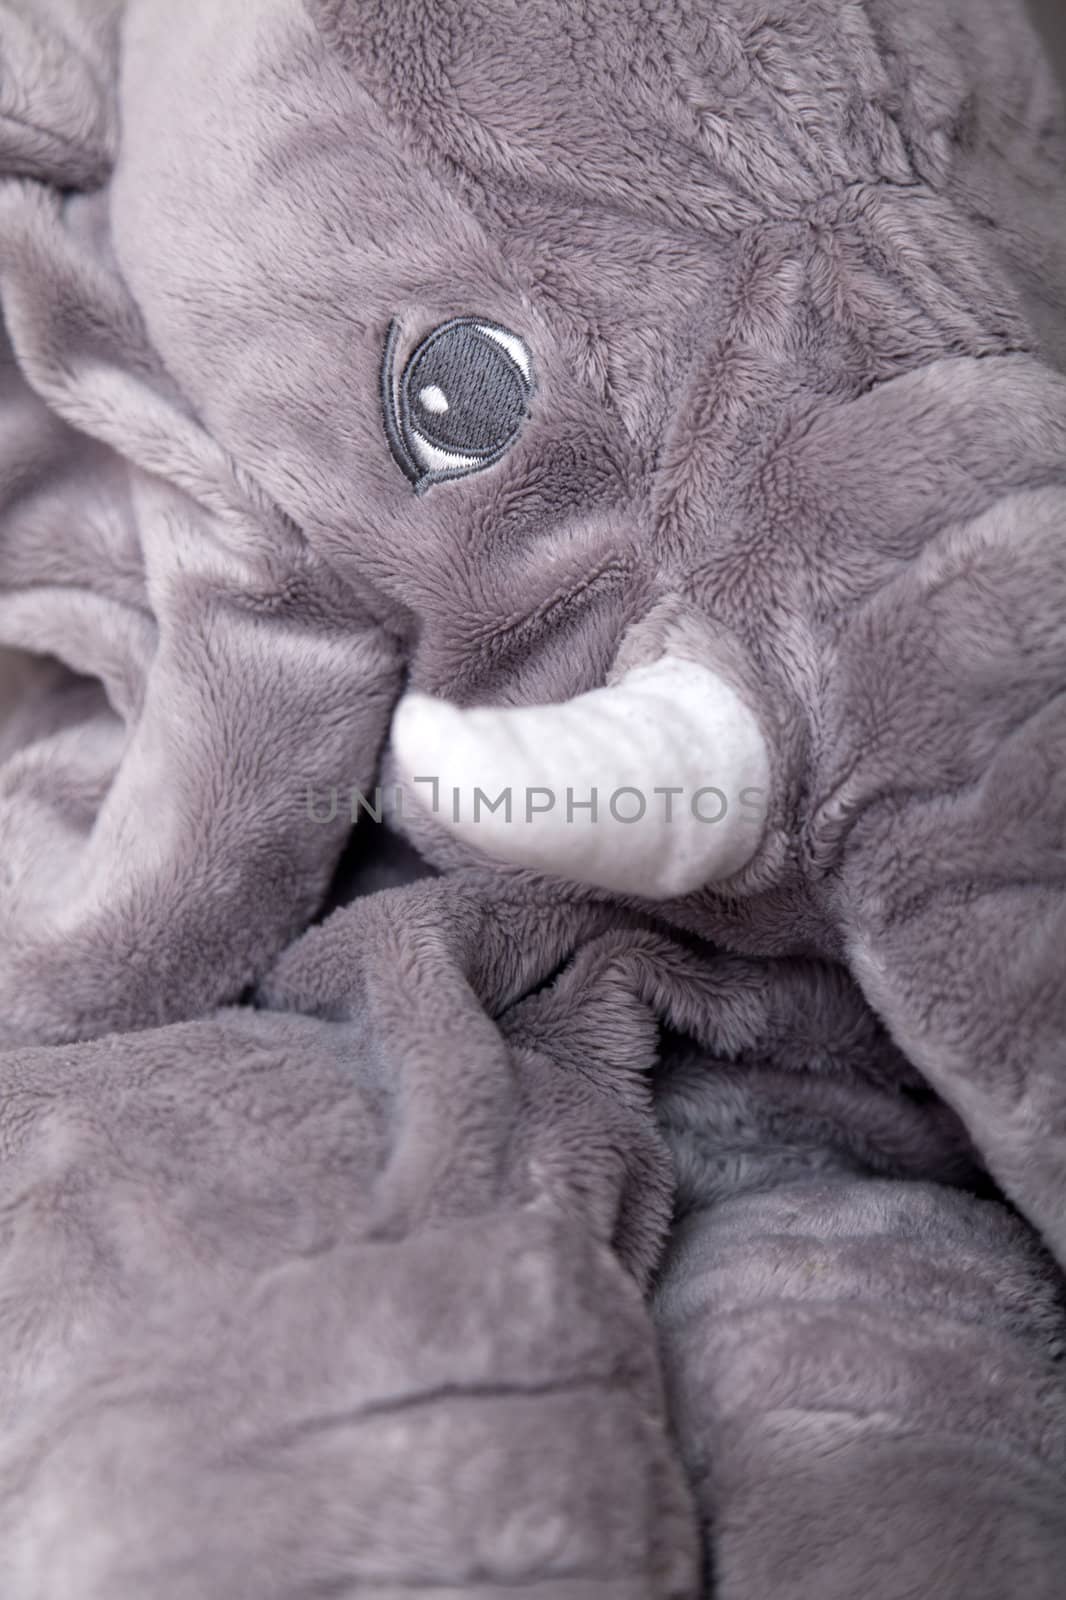 Elephant stuffed toy in gray tones